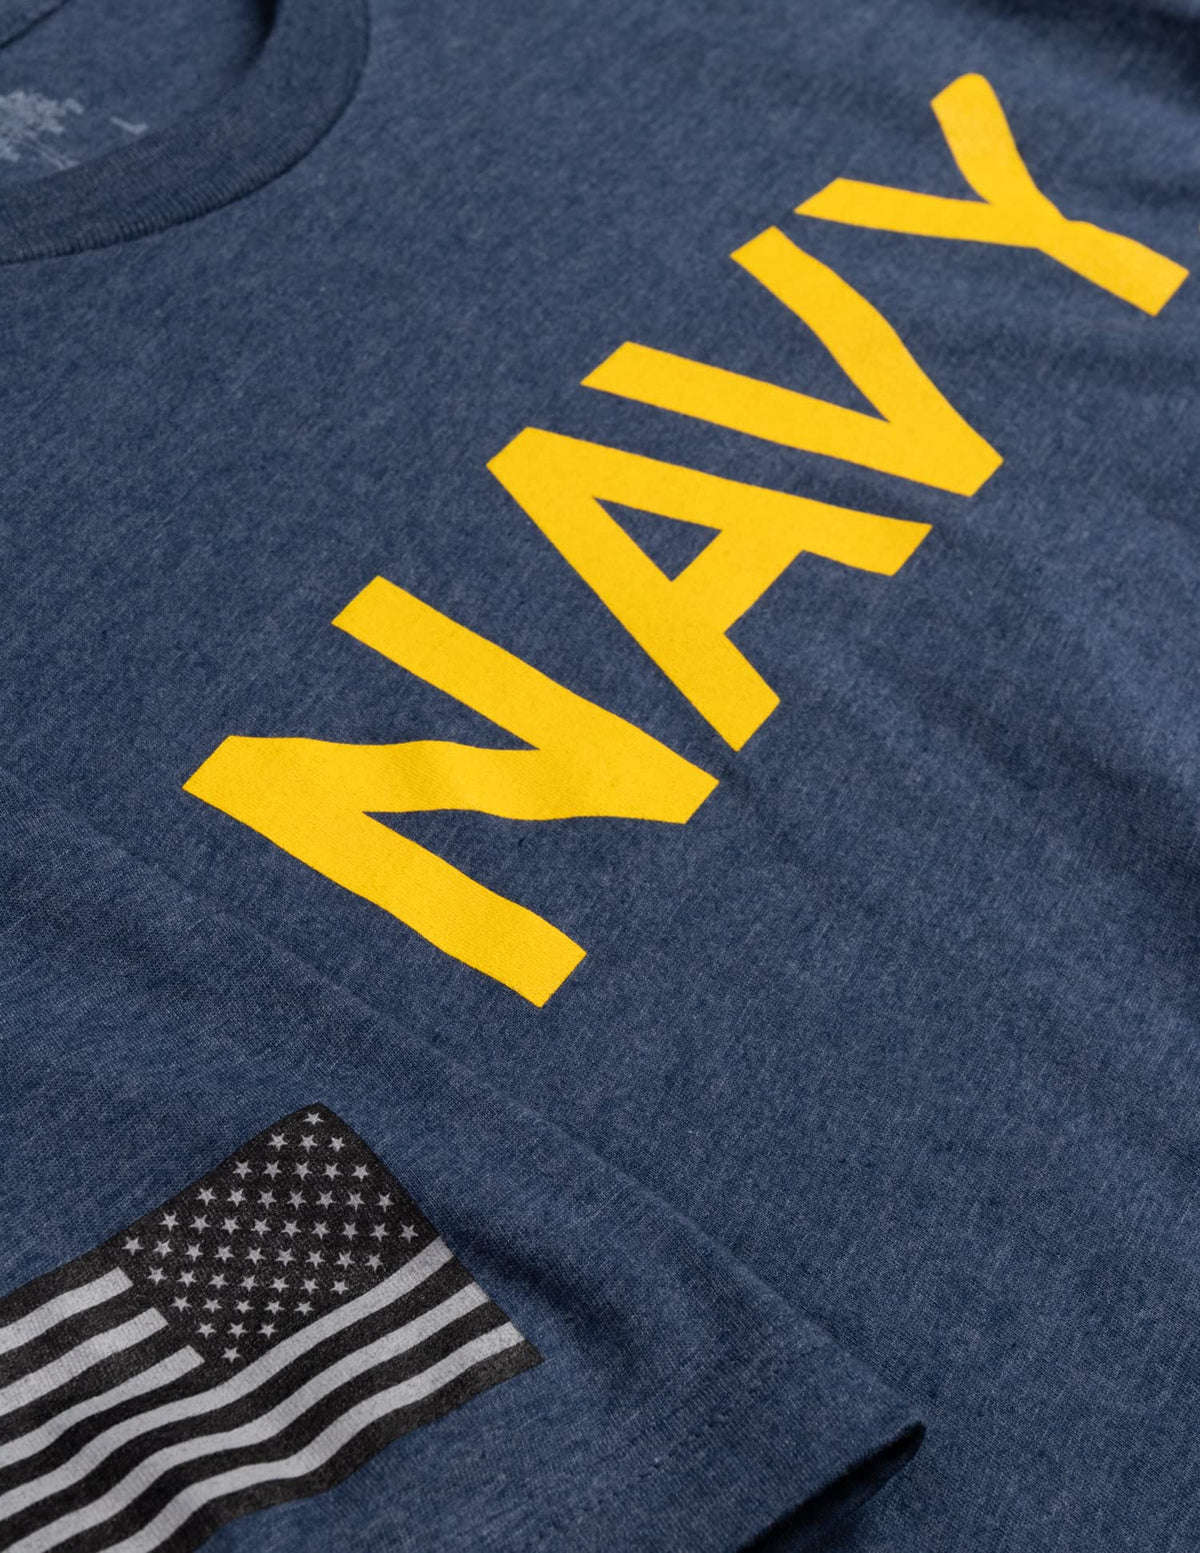 USS Chosin, CG-65 | U.S. Navy Sailor Veteran USN United States Naval T-shirt for Men Women